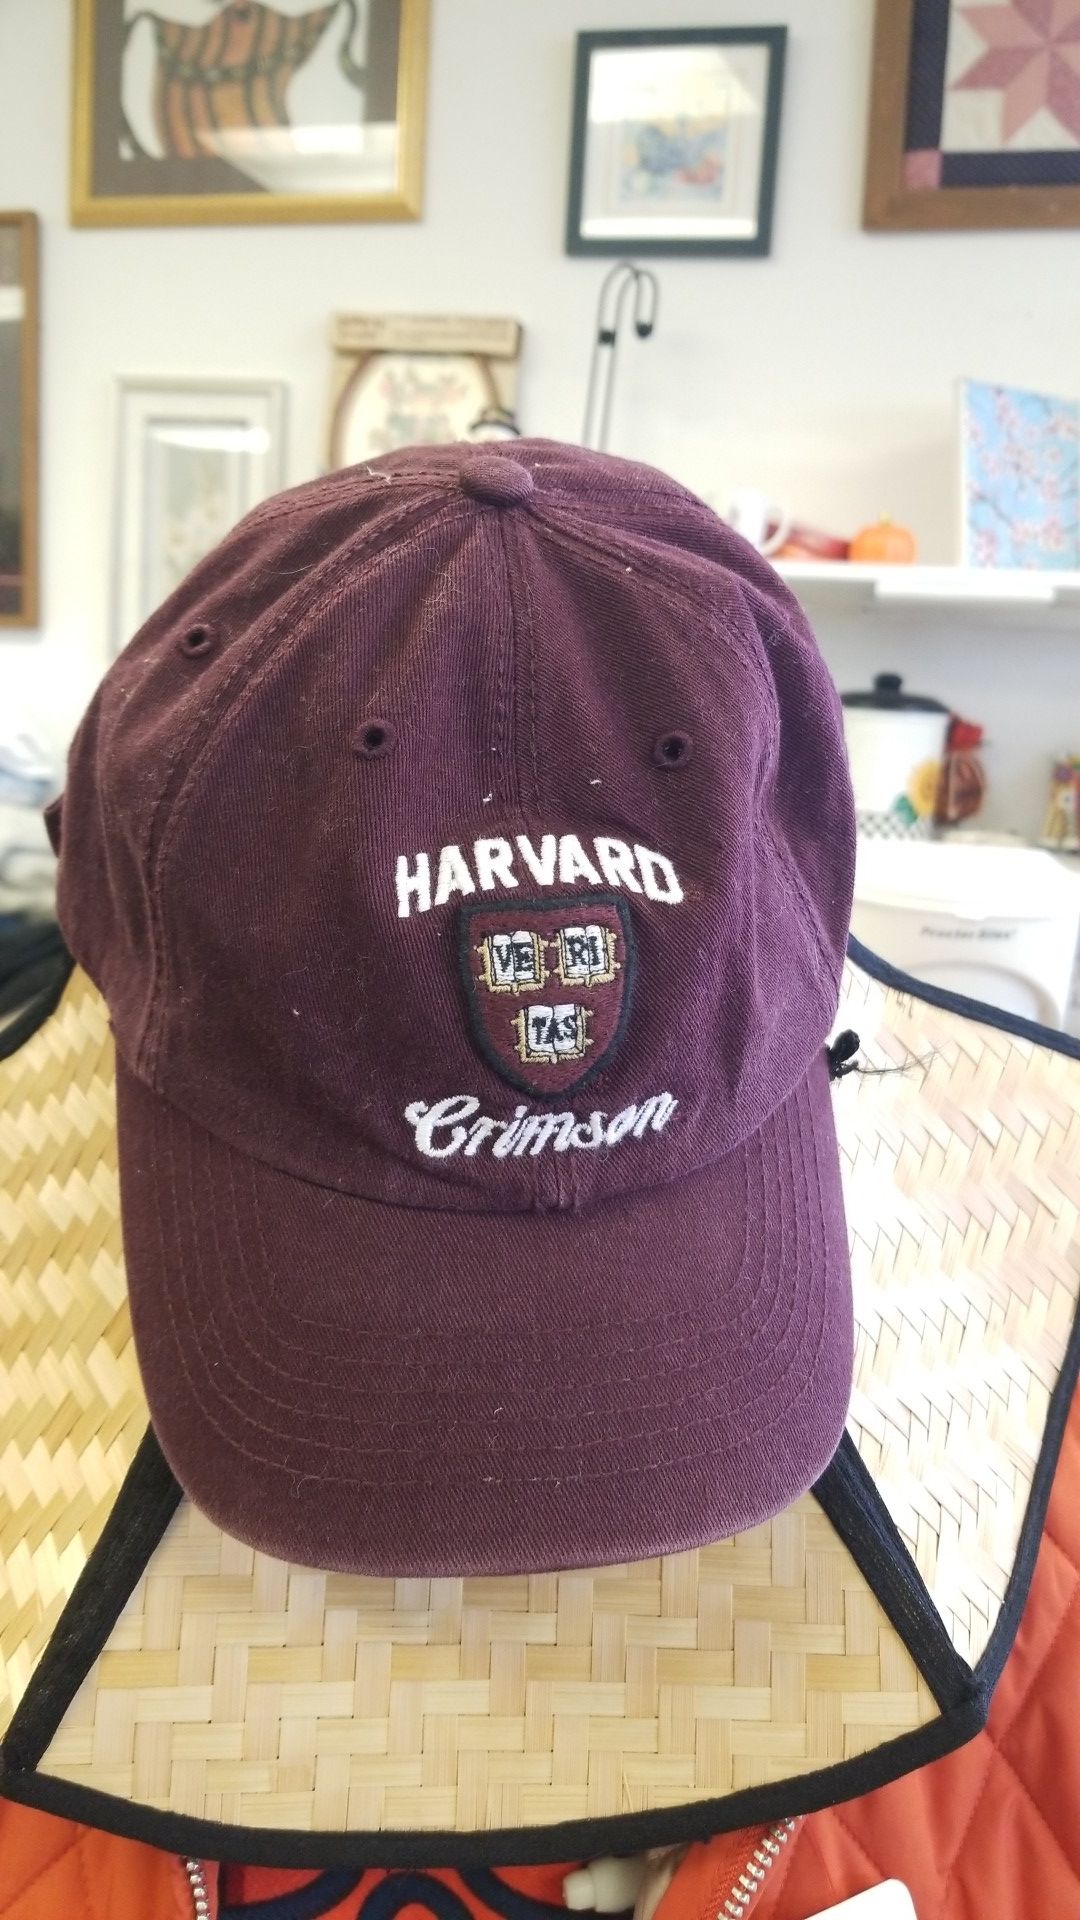 Harvard hat cap